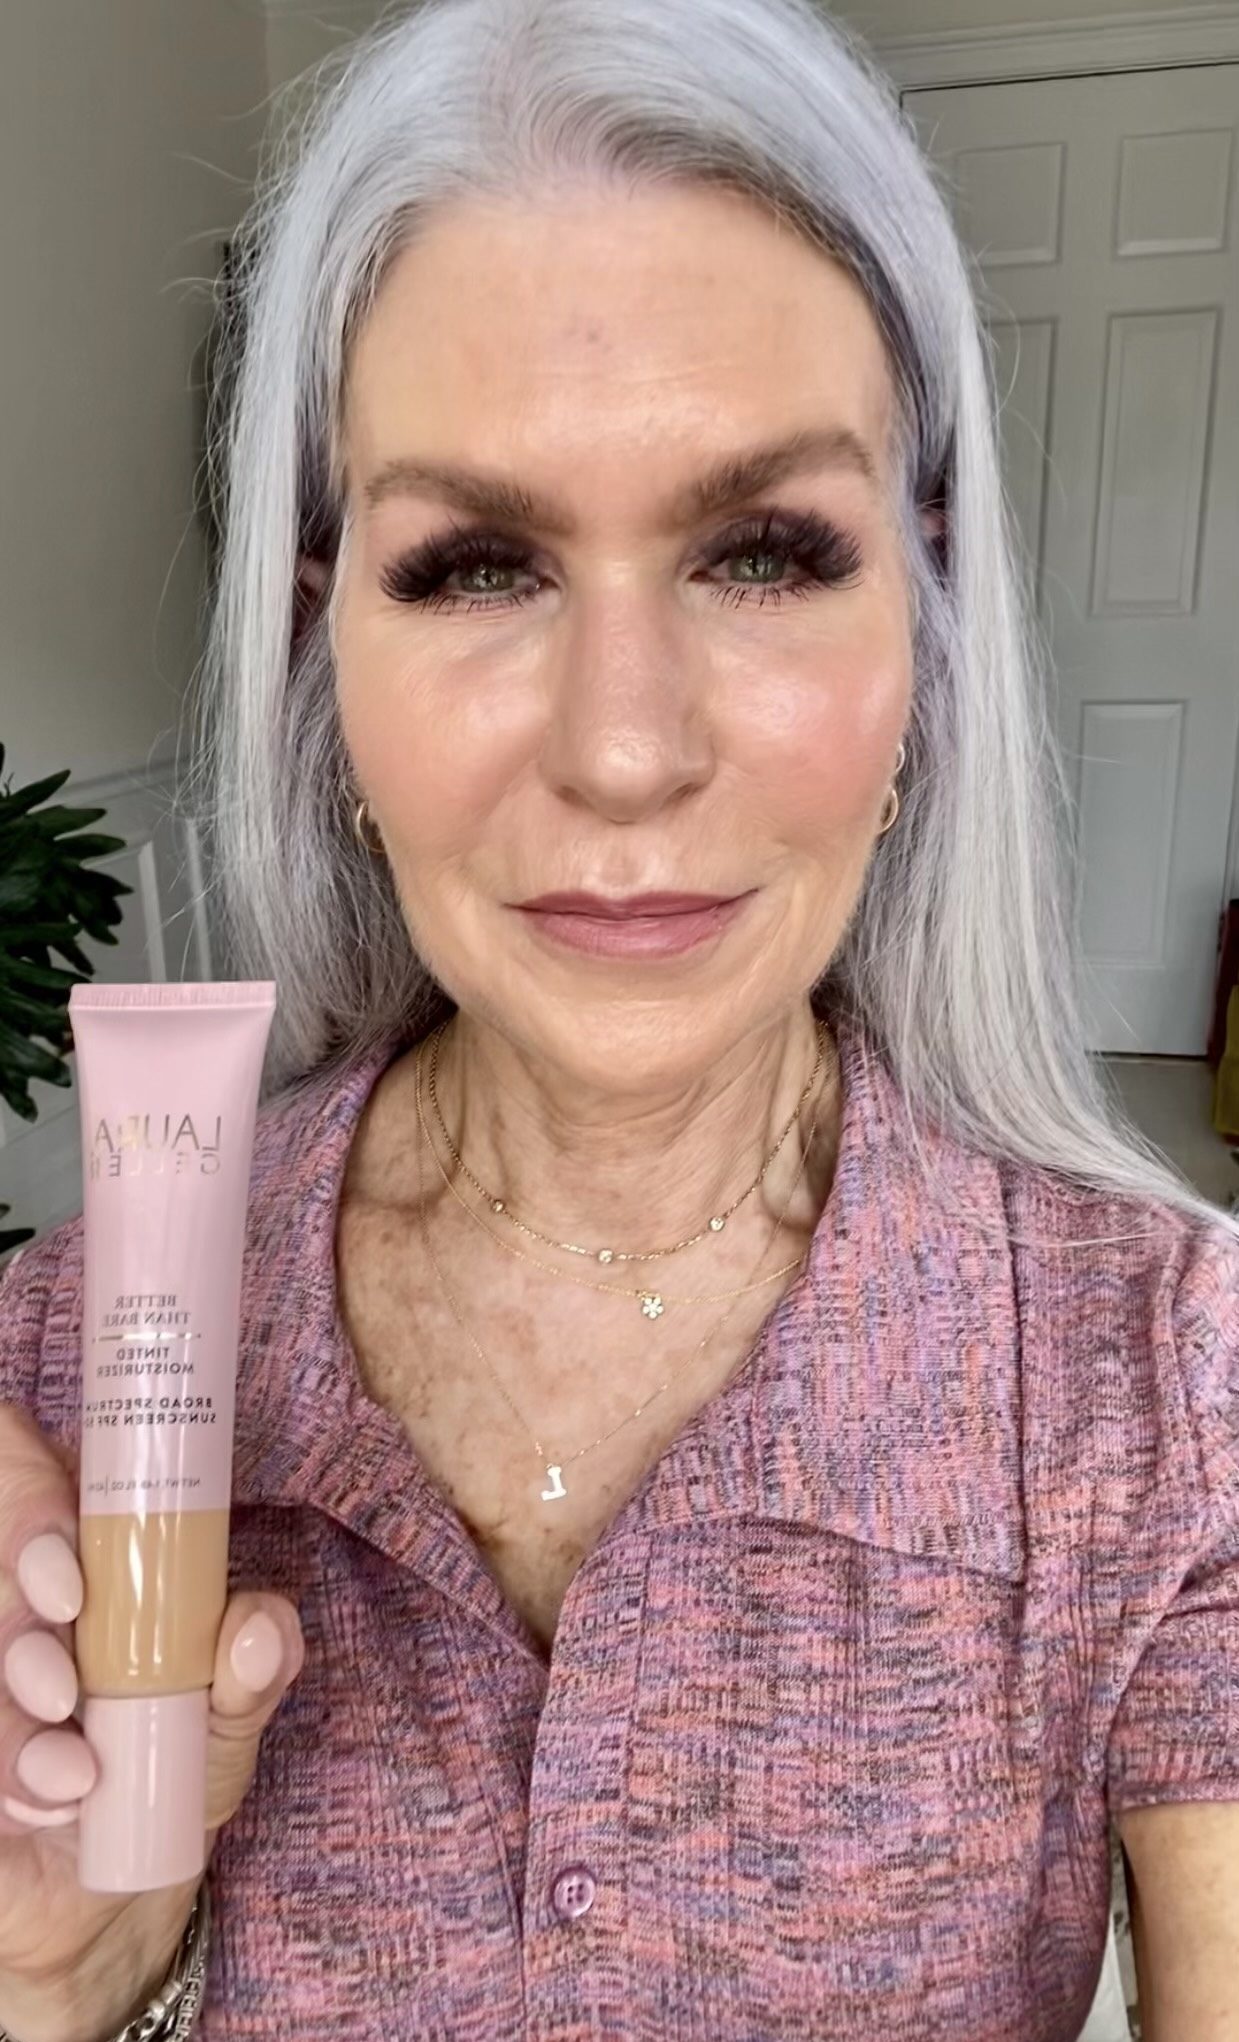 Silver hair lady holding laura gellar makeup